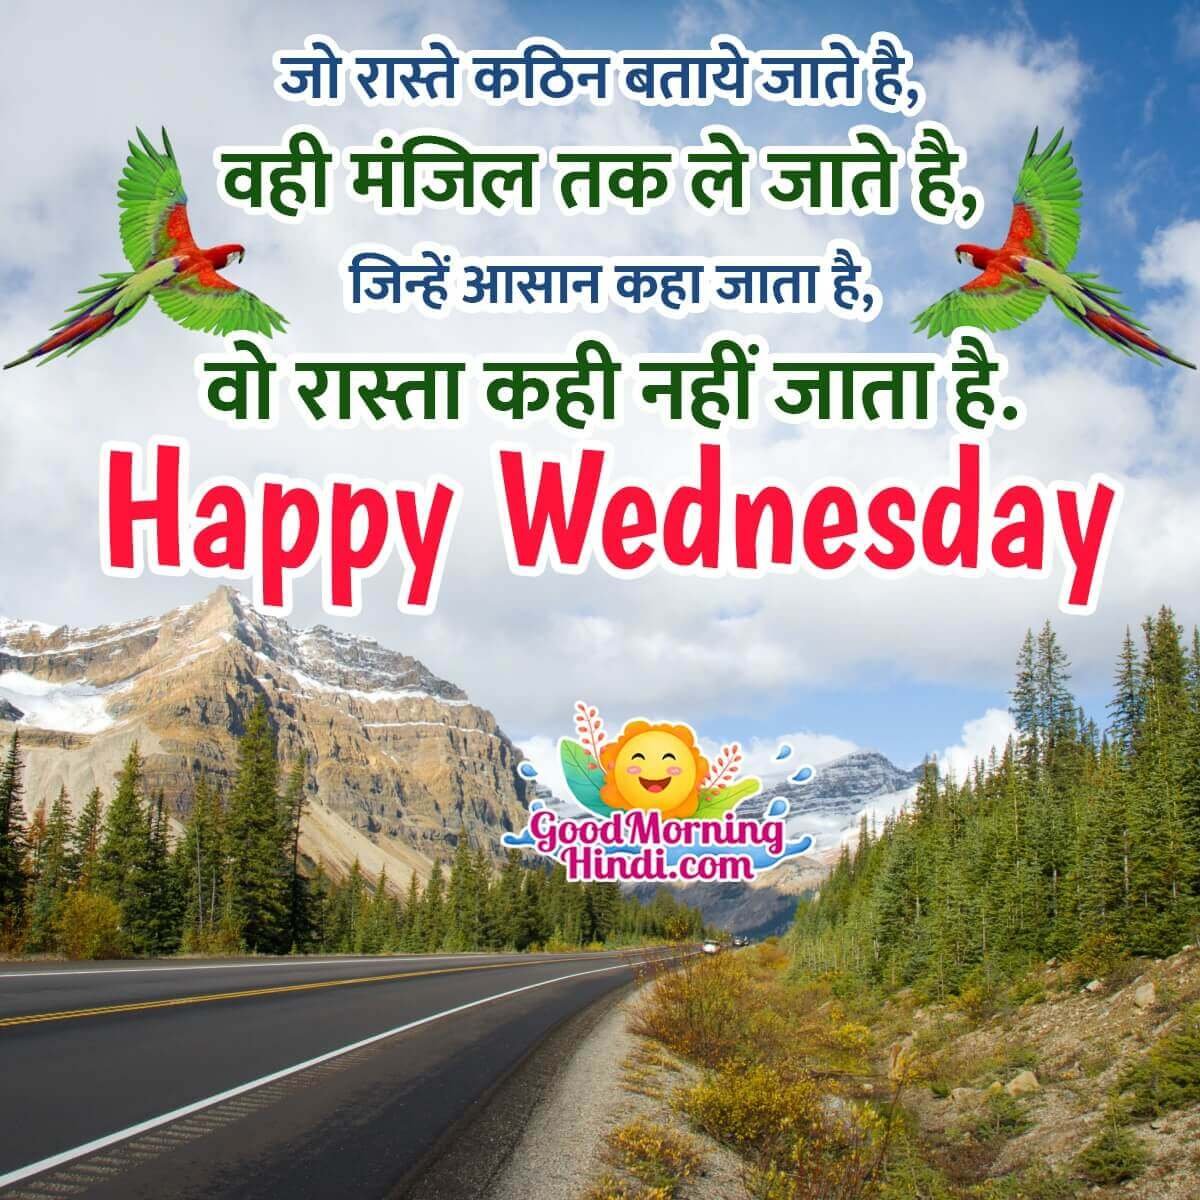 Happy Wednesday Hindi Message Pic